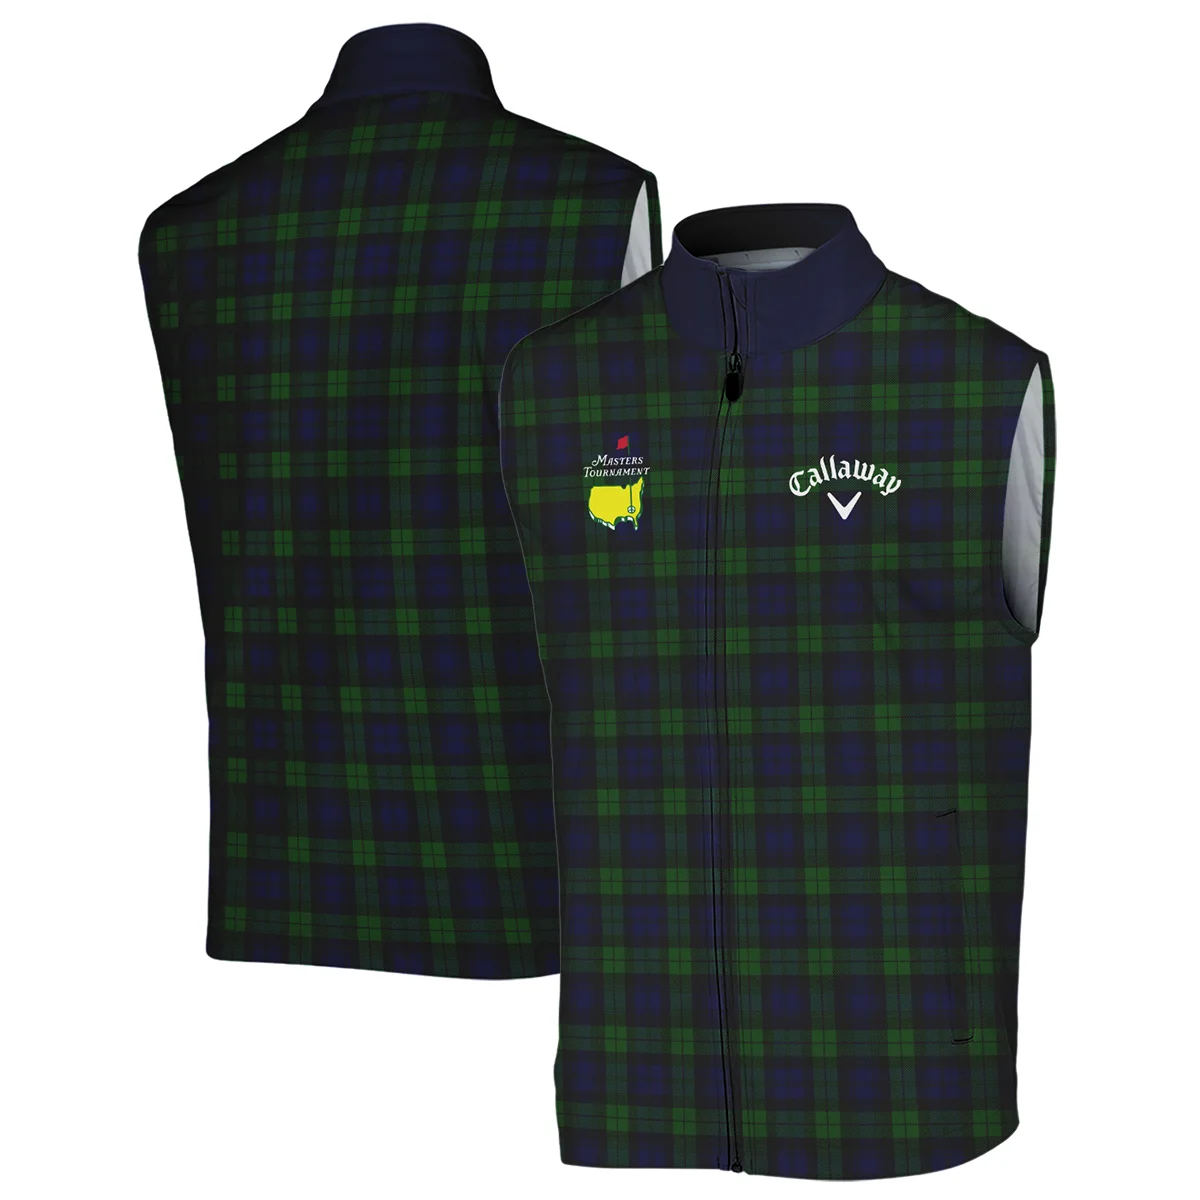 Masters Tournament Callaway Golf Sleeveless Jacket Sports Green Purple Black Watch Tartan Plaid Sports All Over Print Sleeveless Jacket